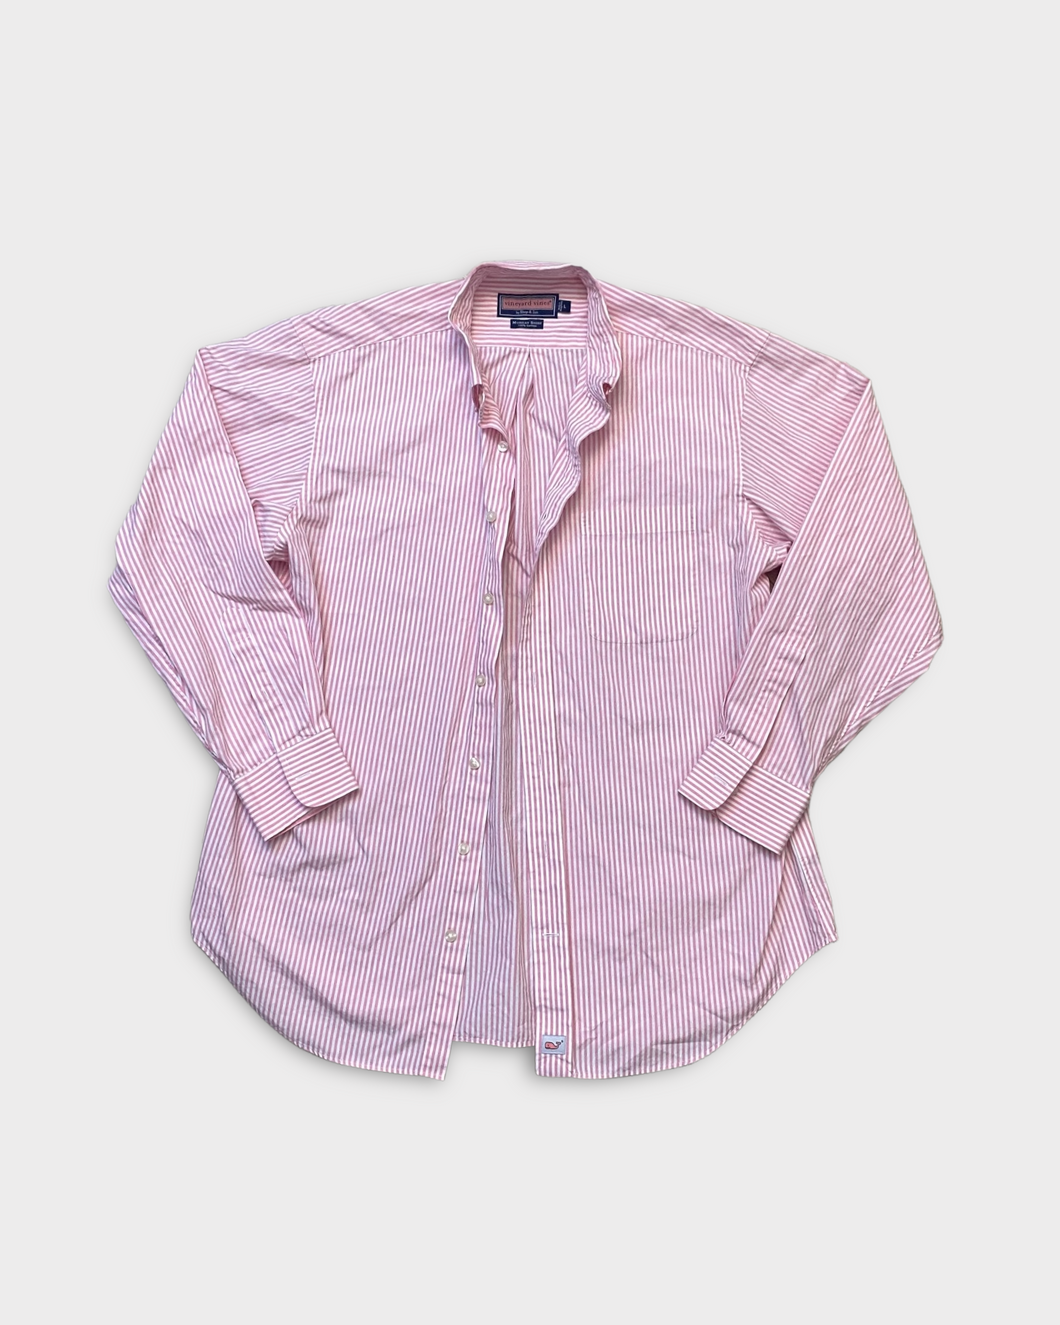 Vineyard Vines Pink Striped Button Up Shirt